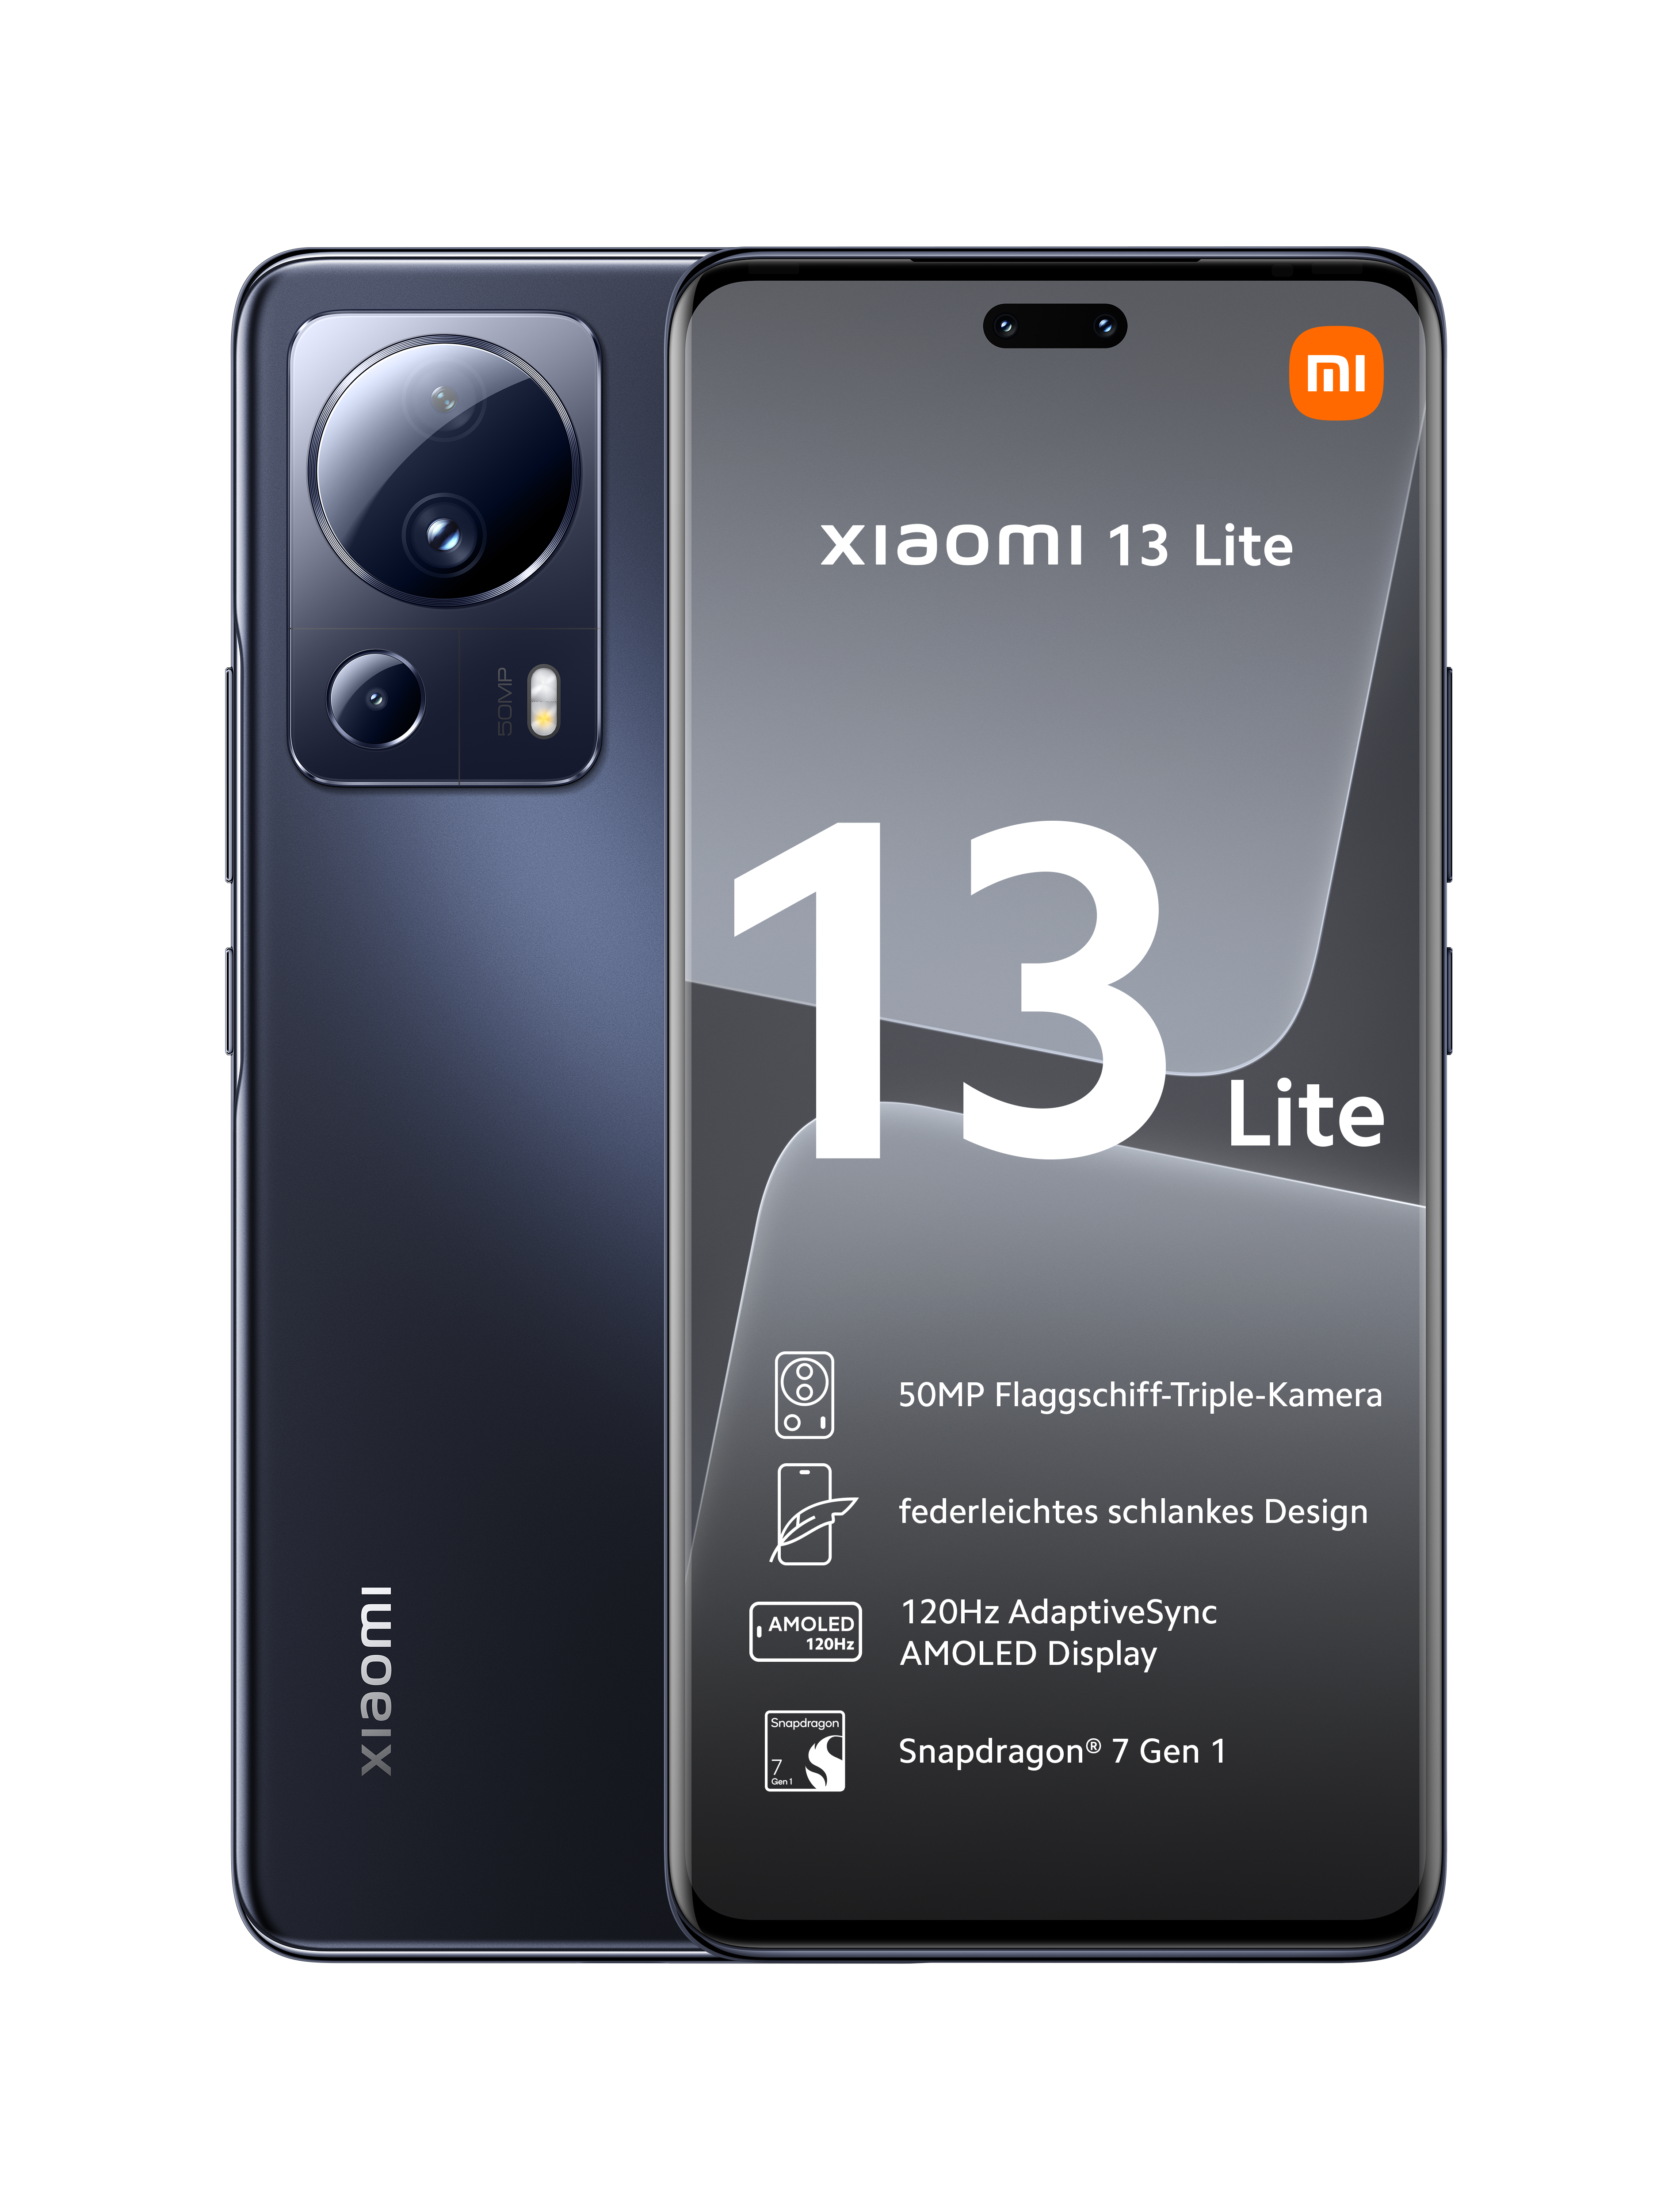 Xiaomi 13 Lite Spezifikationen